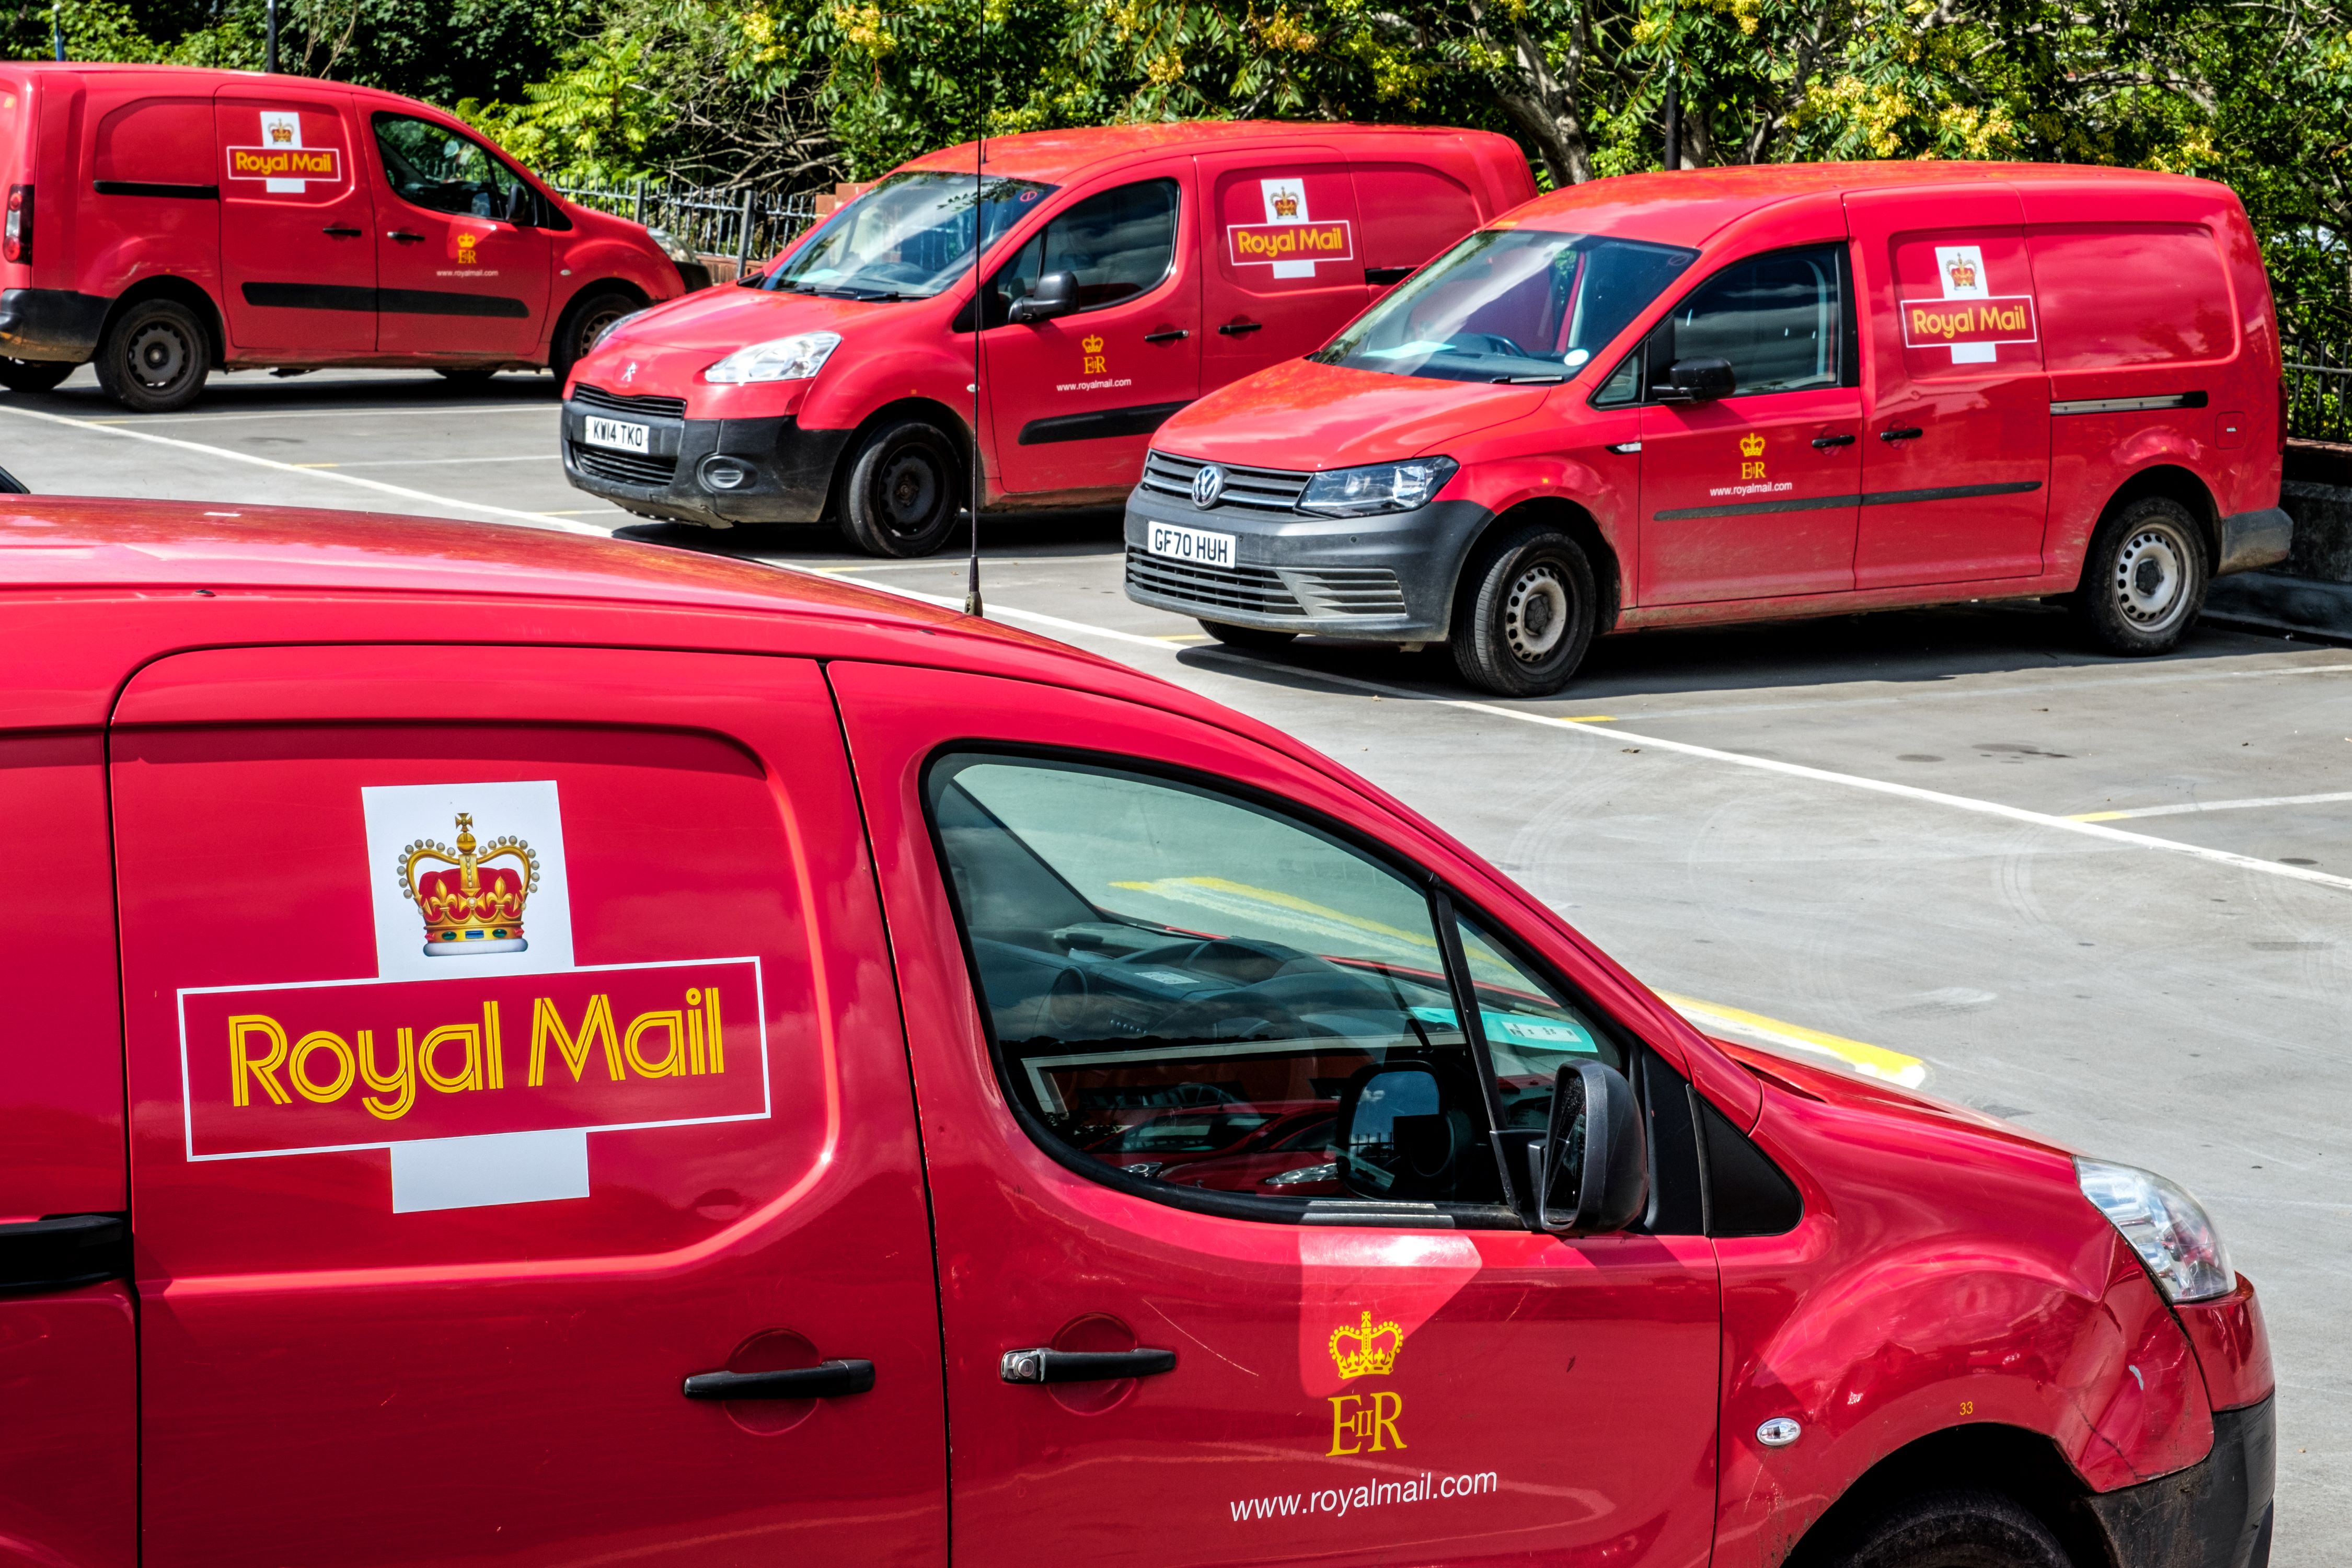 Royal Mail vans parked in car park